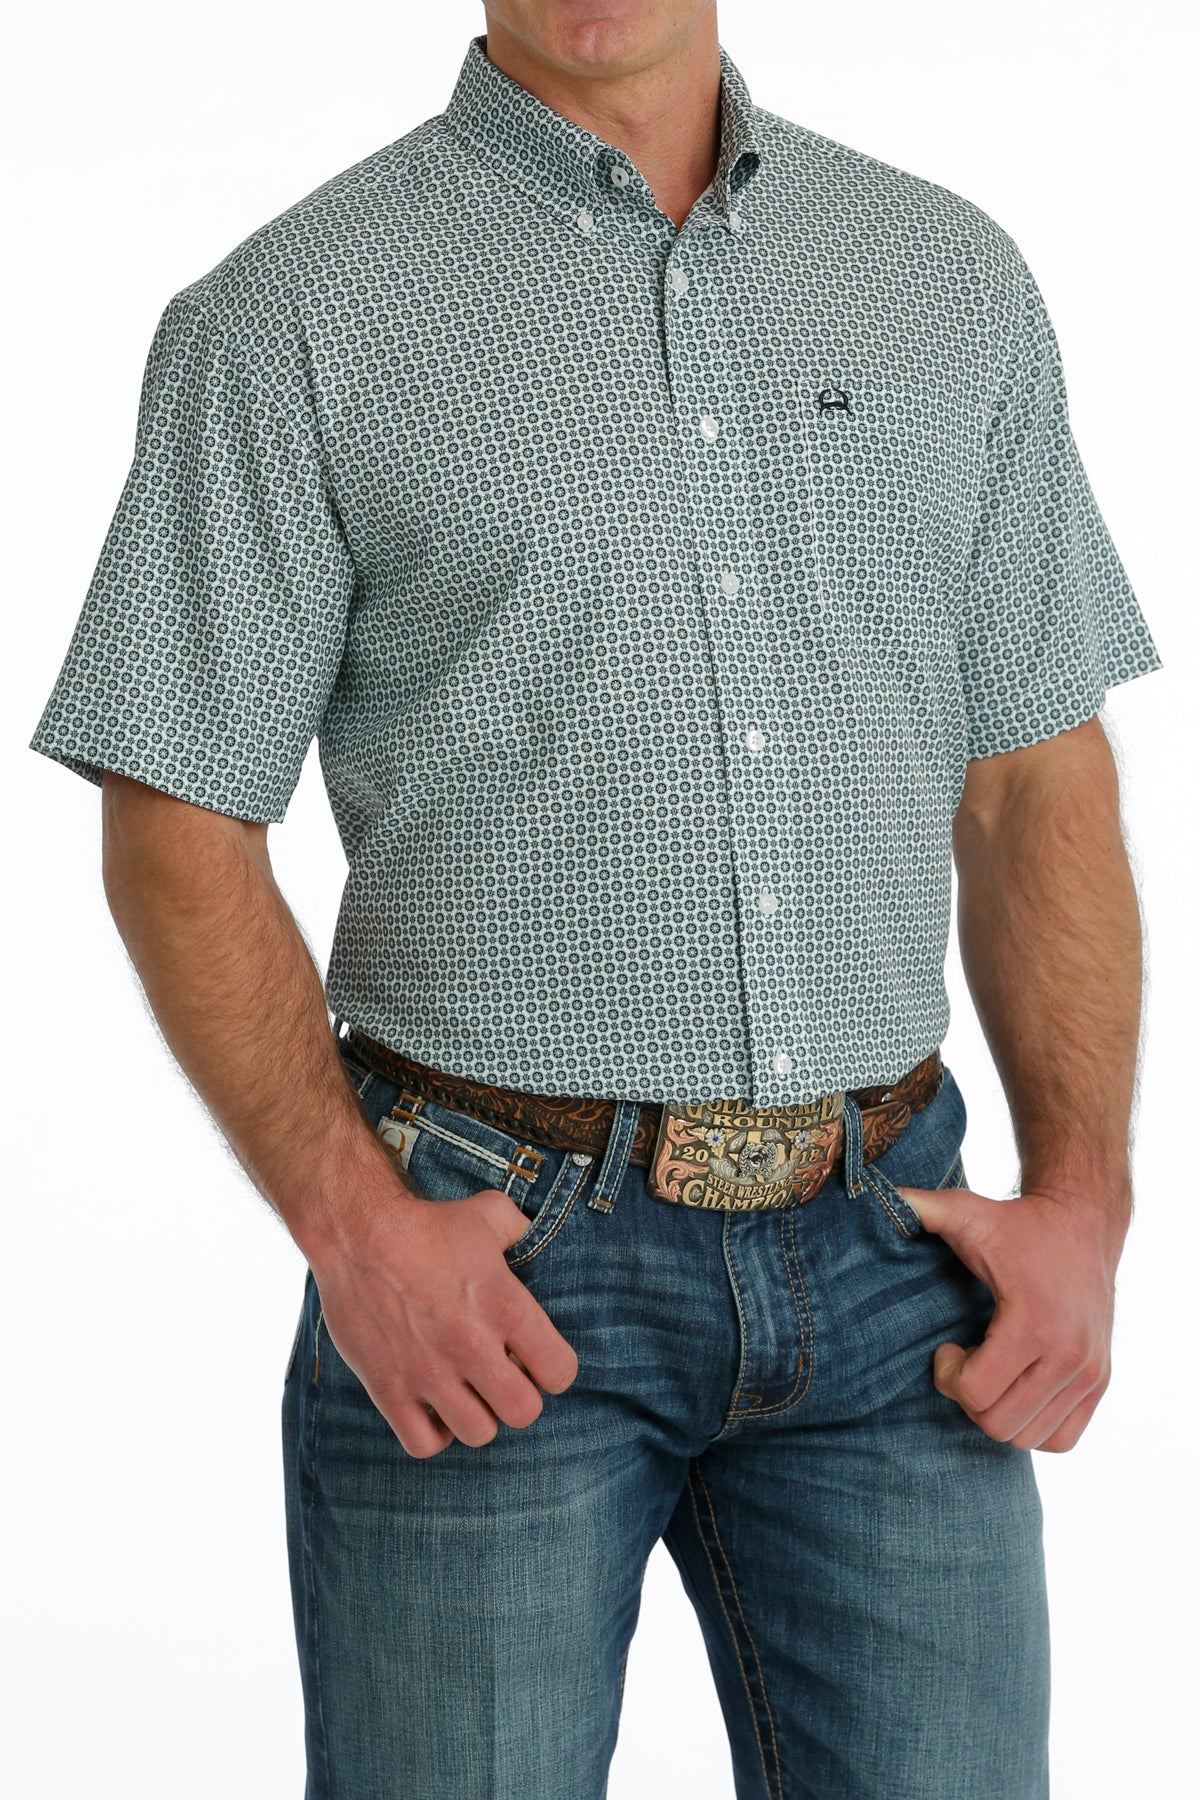 Cinch Men's White w/Teal Geometric Print Arena Flex Short Sleeve Shirt